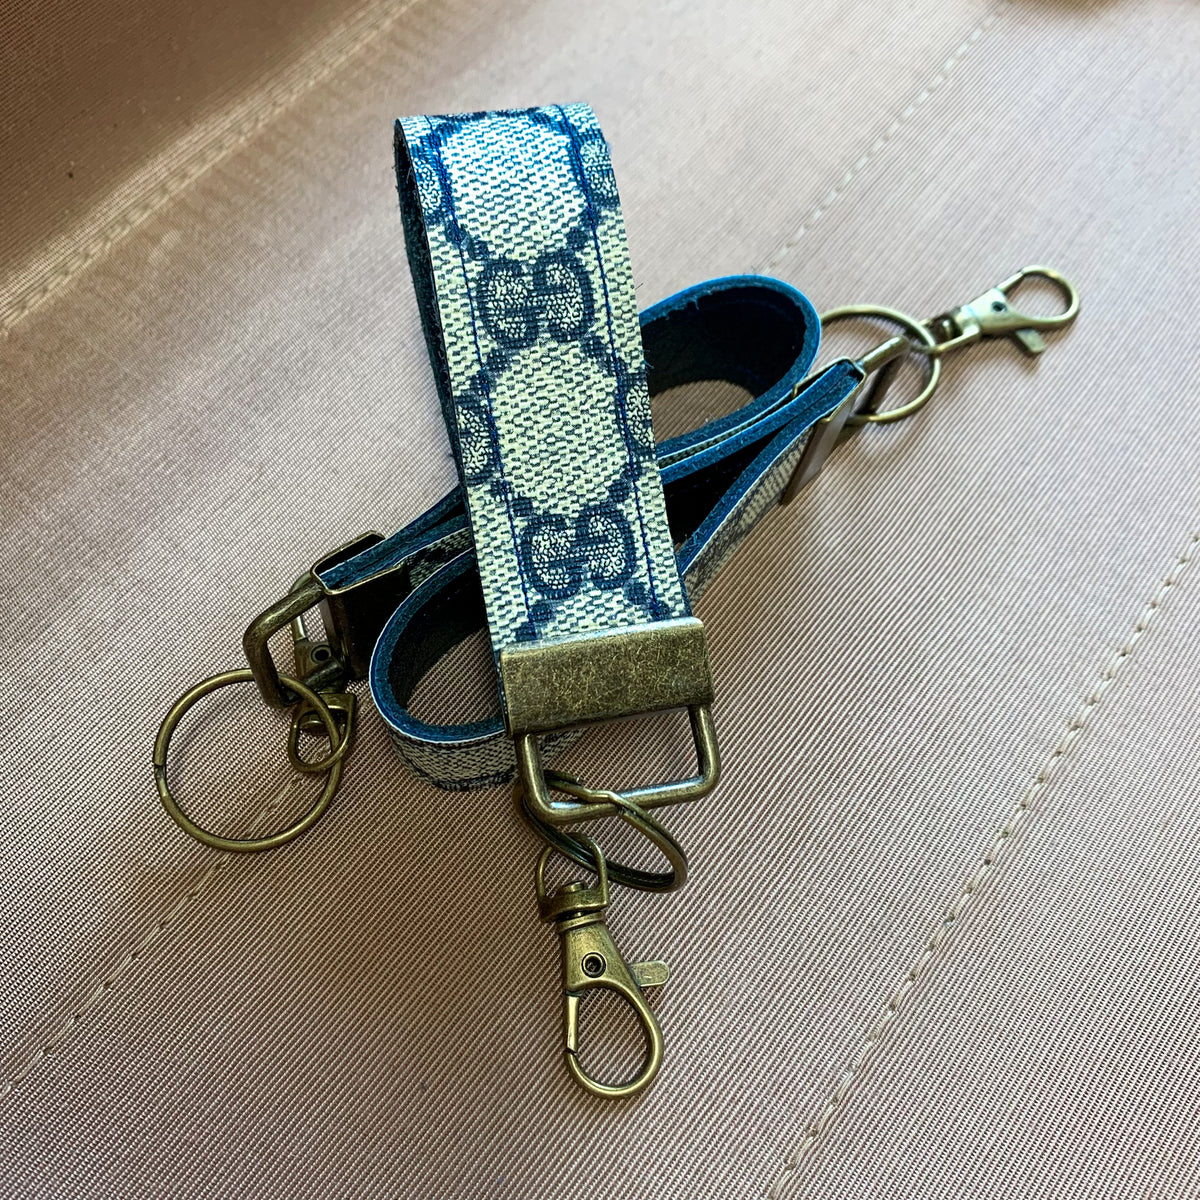 Gucci Keychain in Blue